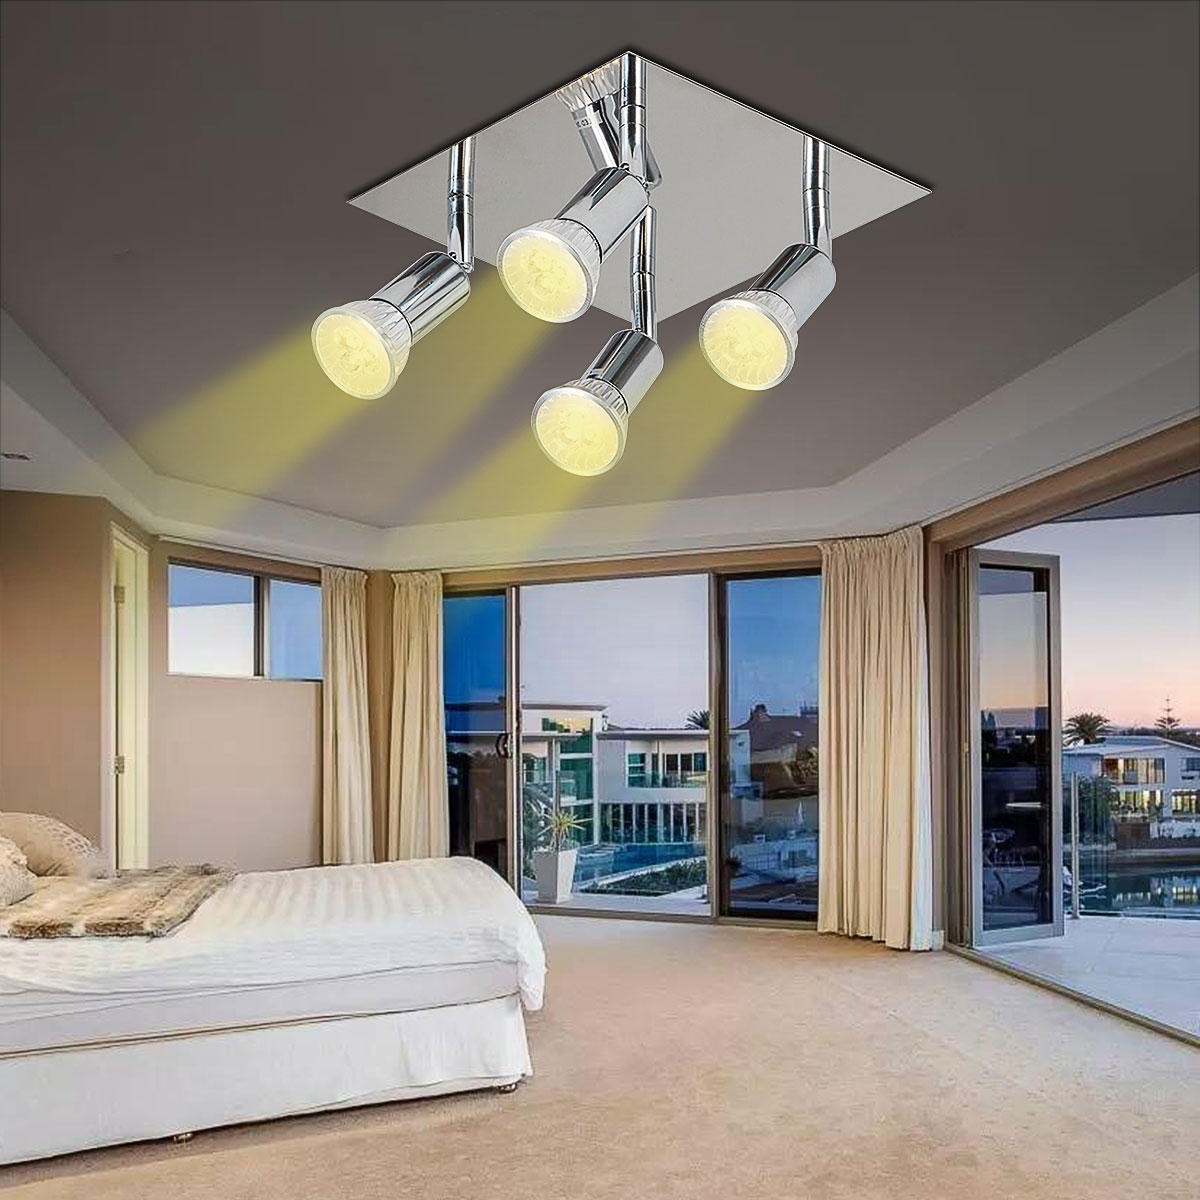 4 Way Gu10 Ceiling Light Fitting Adjustable Pendant Lamp Room Home Fixture